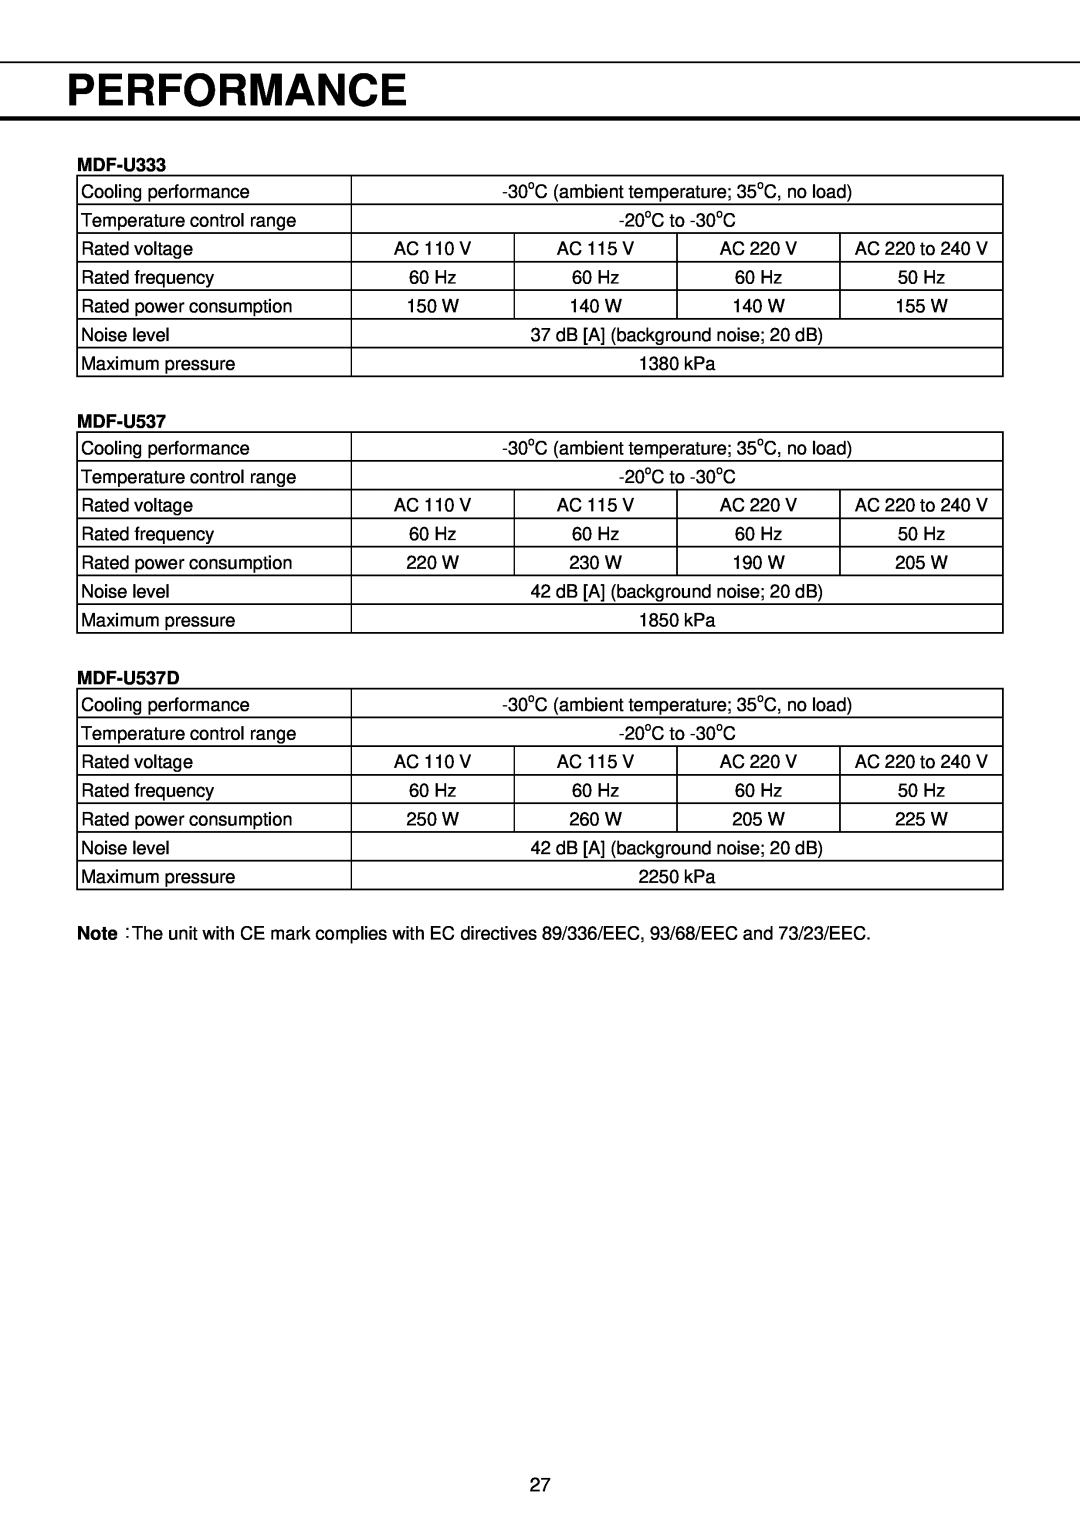 Sanyo instruction manual Performance, MDF-U333, MDF-U537D 